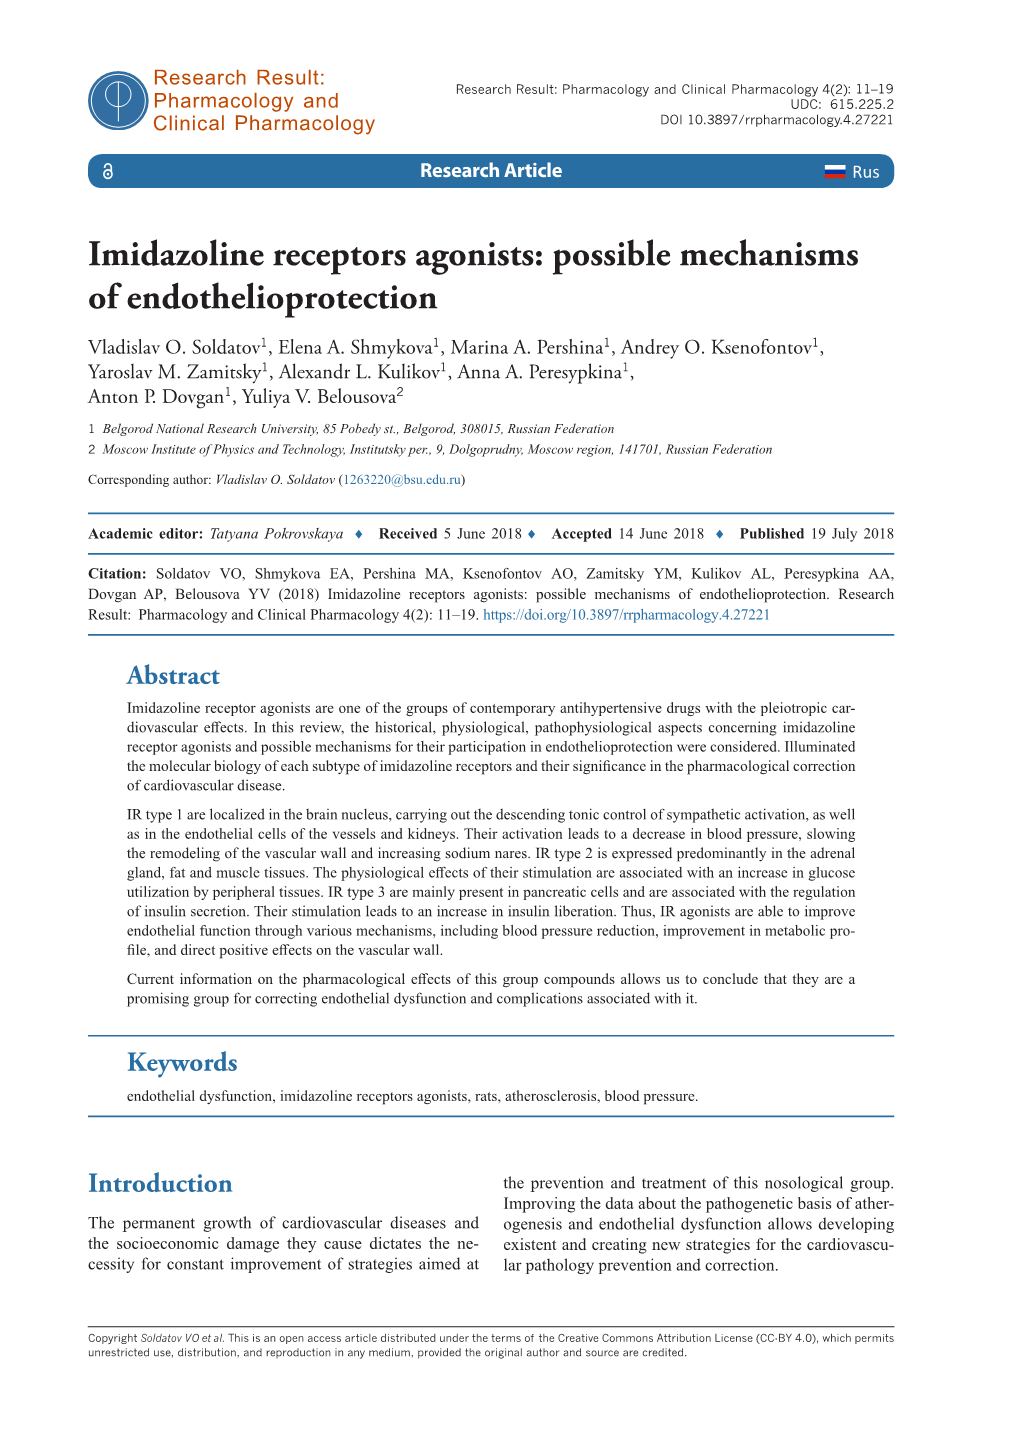 ﻿Imidazoline Receptors Agonists: Possible Mechanisms Of